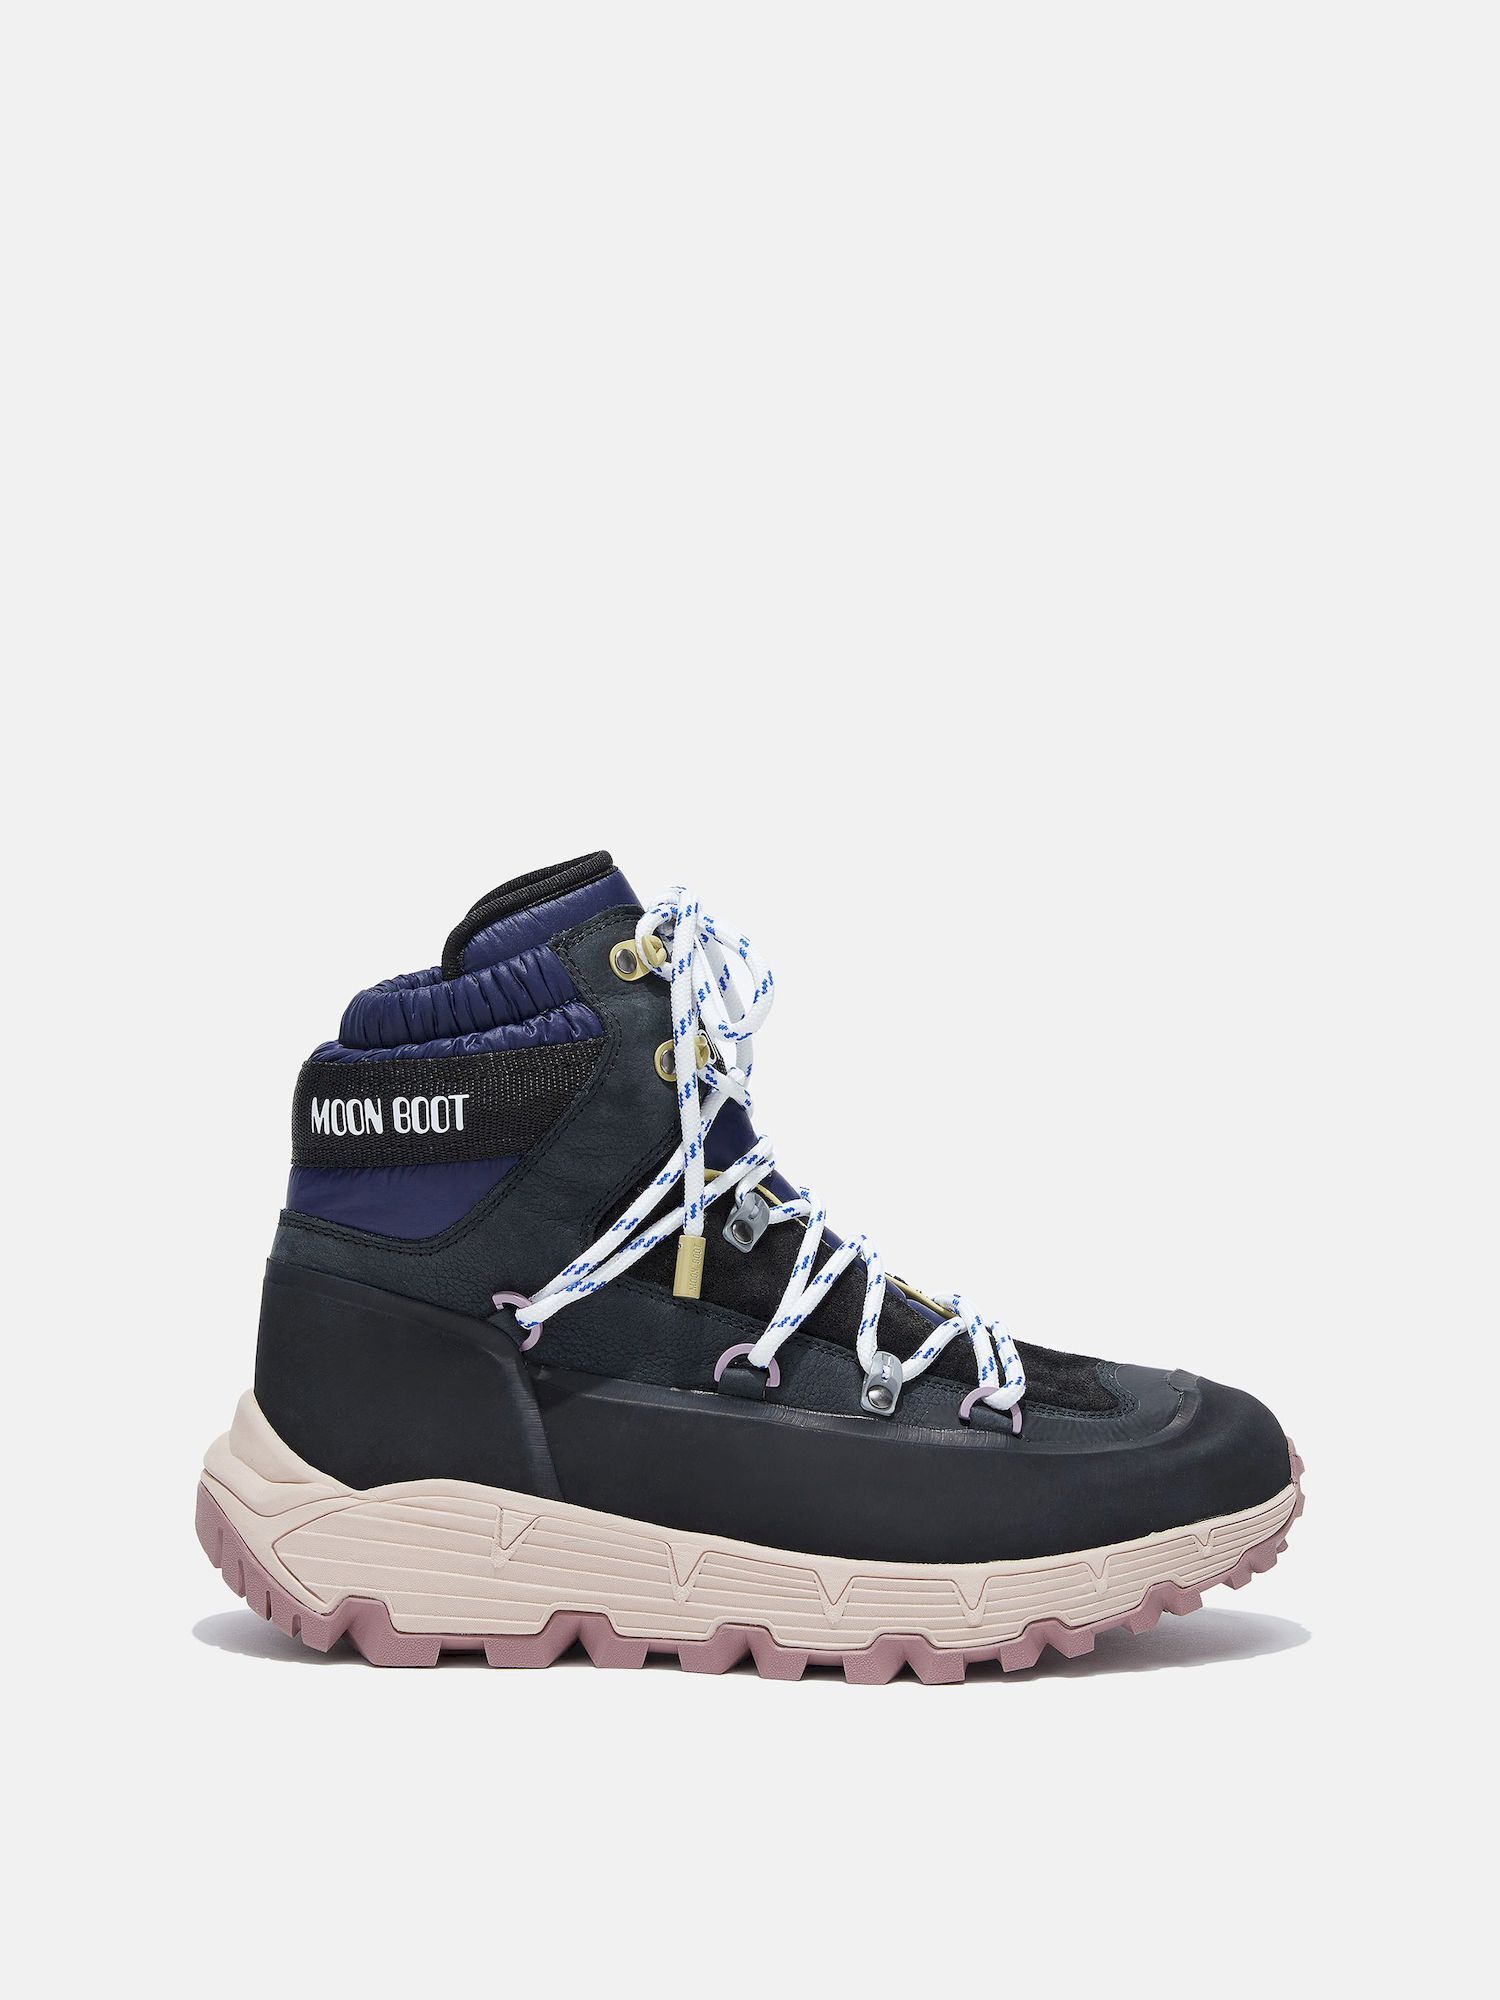 Moon Boot Tech Hiker - Bottes de neige - Scarponi da neve | Hardloop